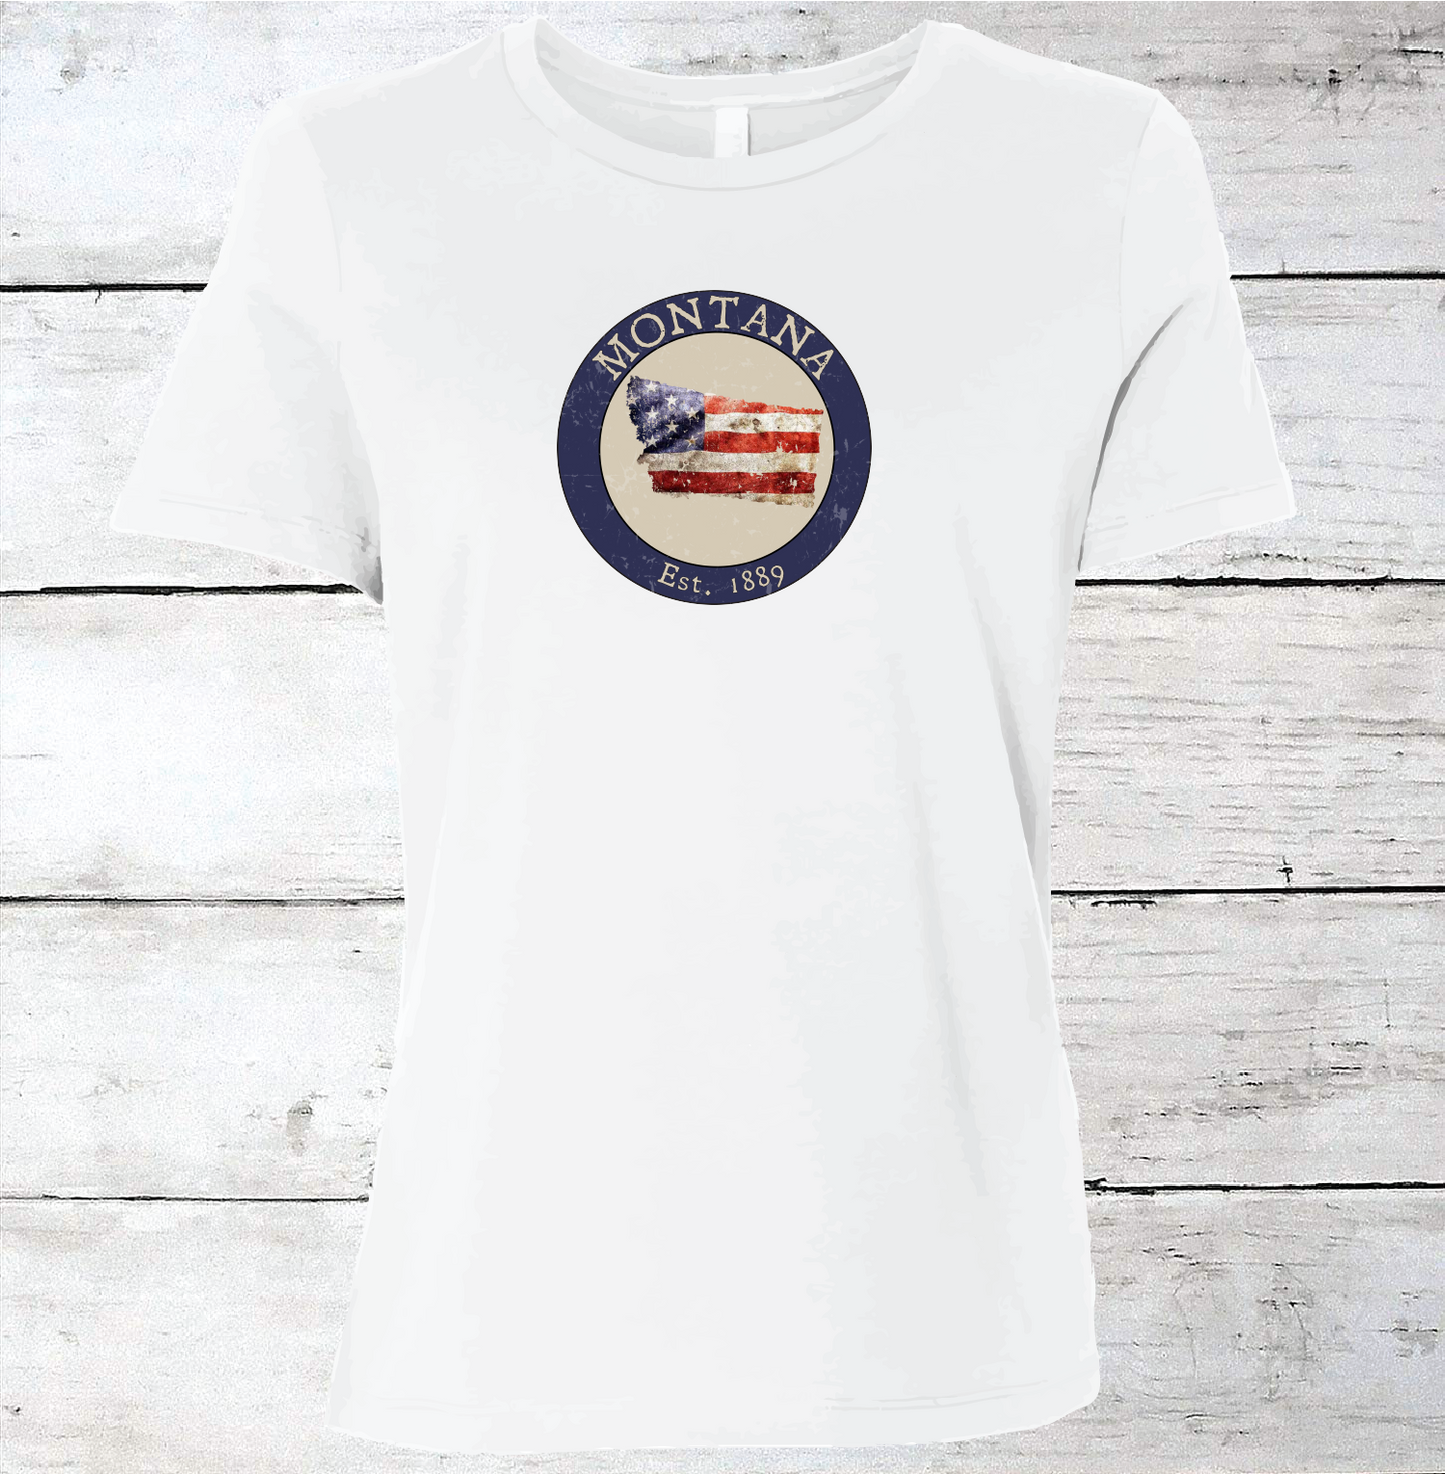 Montana MT American Flag T-Shirt